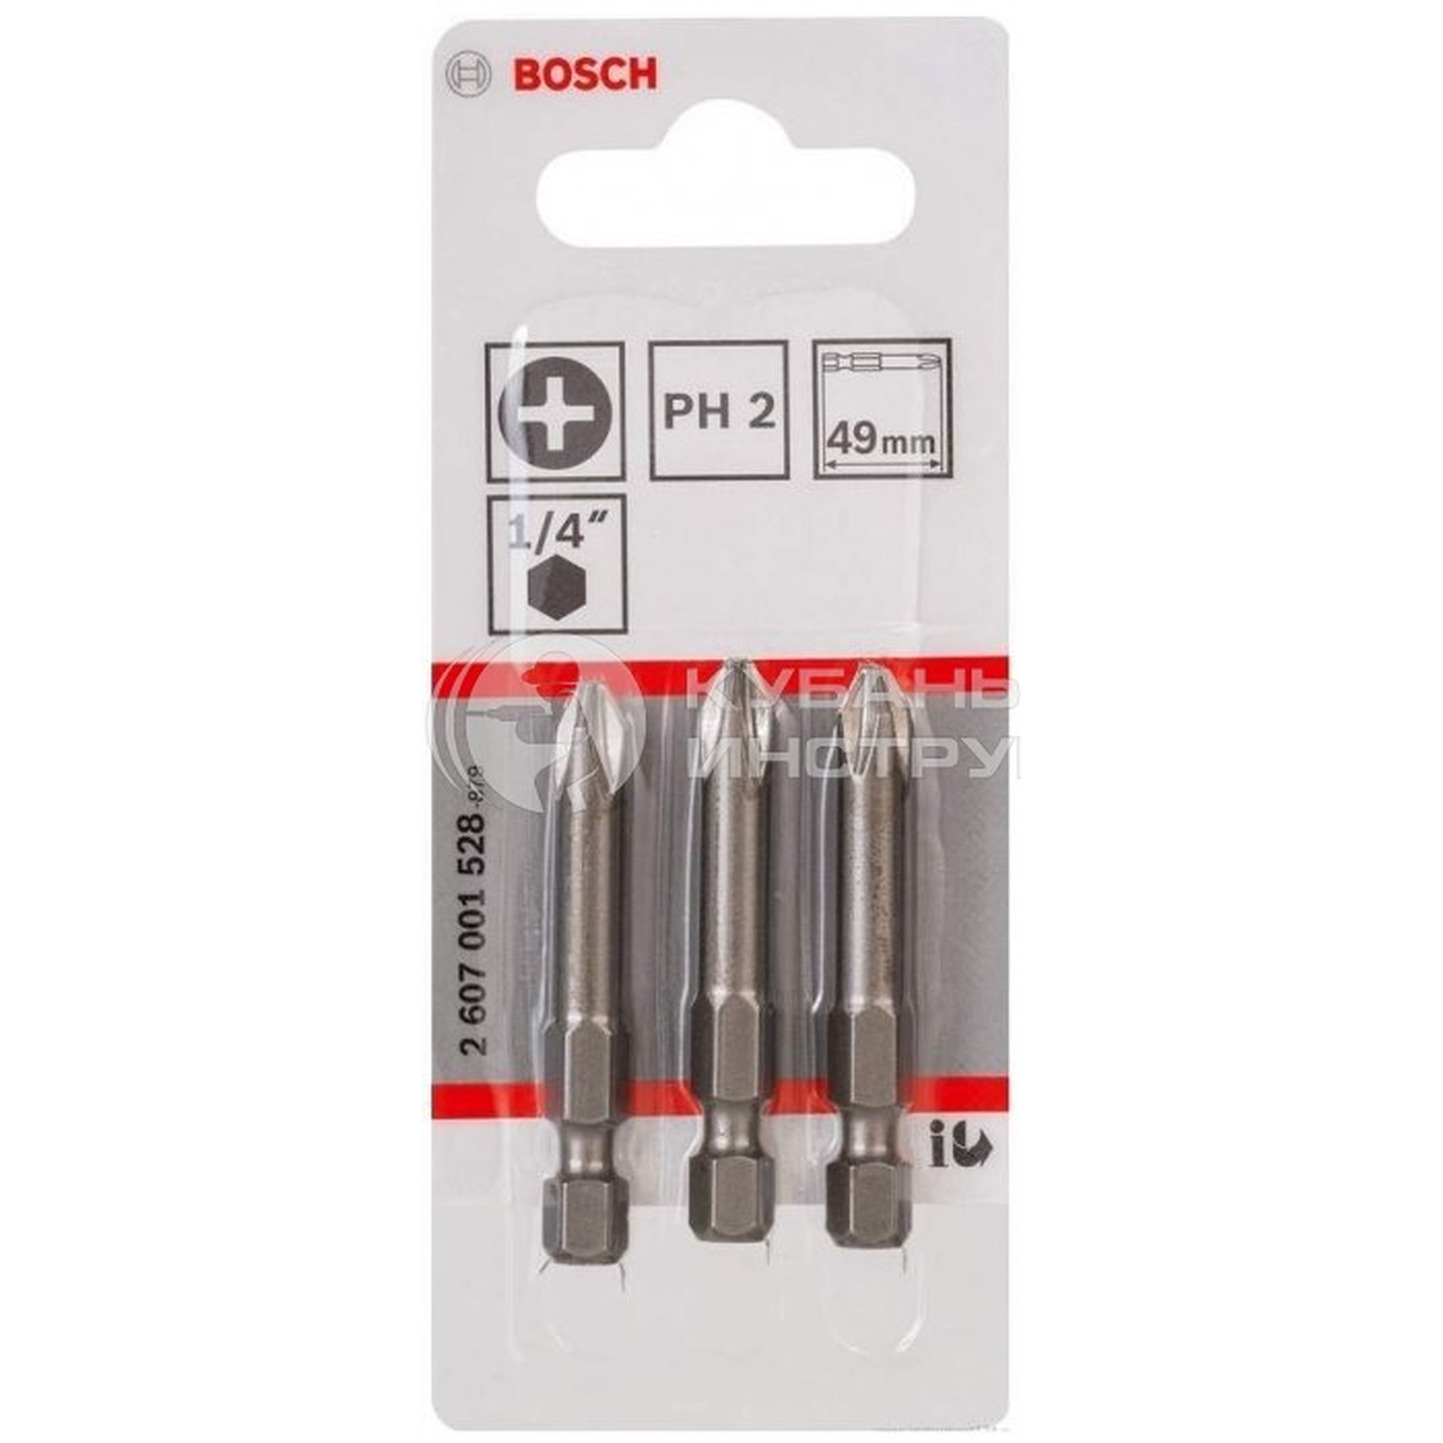 Бита Bosch 49мм PH2 XH 3шт 2607001528 бита bosch 2607001528 ph2 49 мм 3 шт